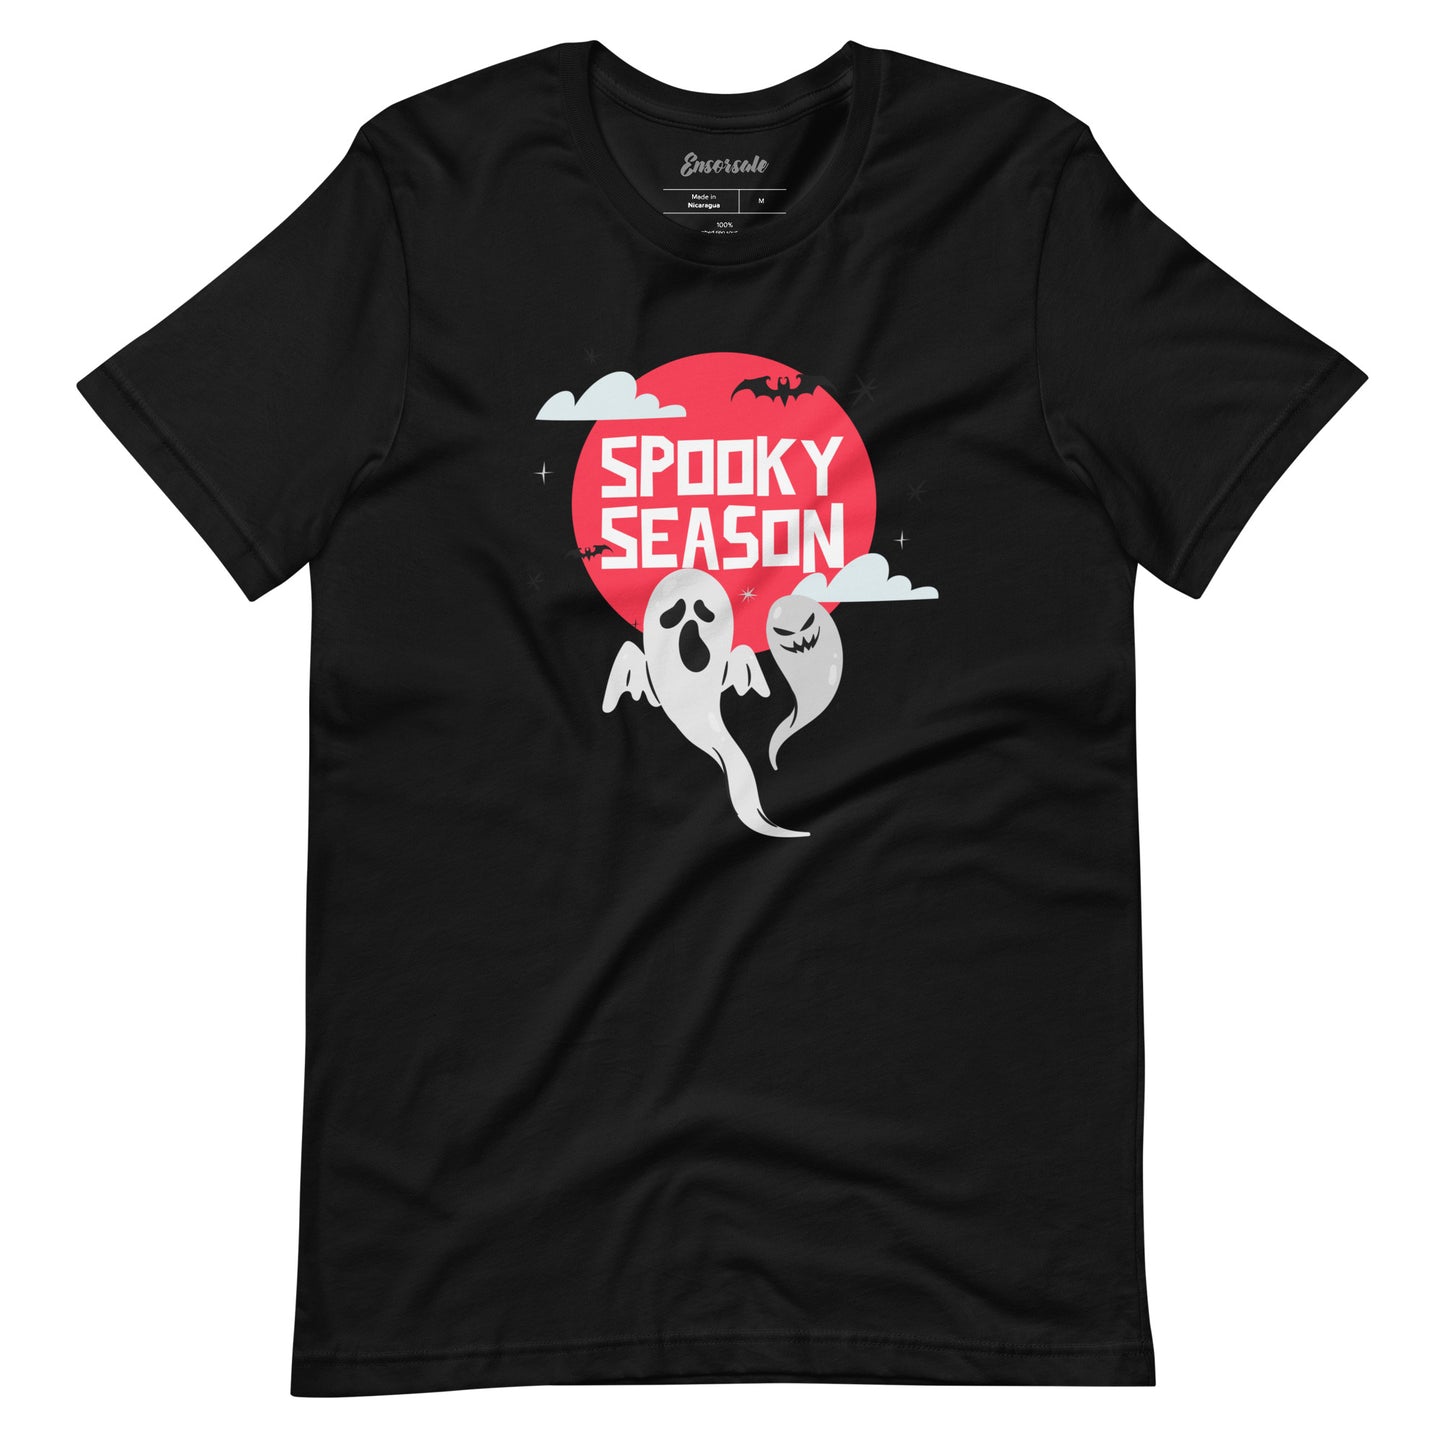 Spooky Season t-shirt